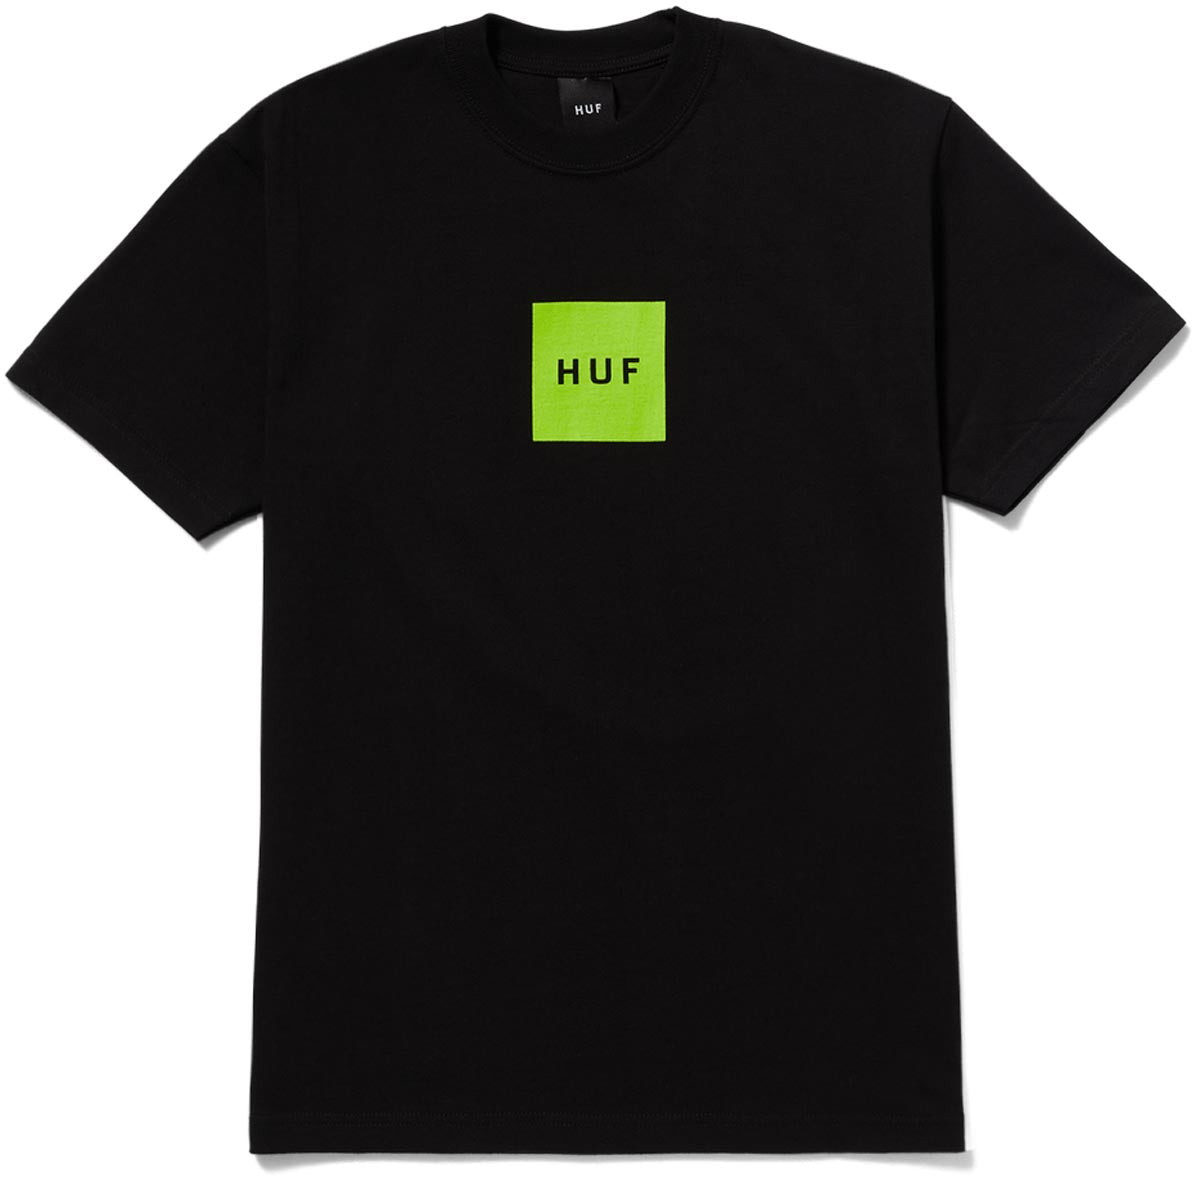 HUF Set Box T-Shirt - Black image 1